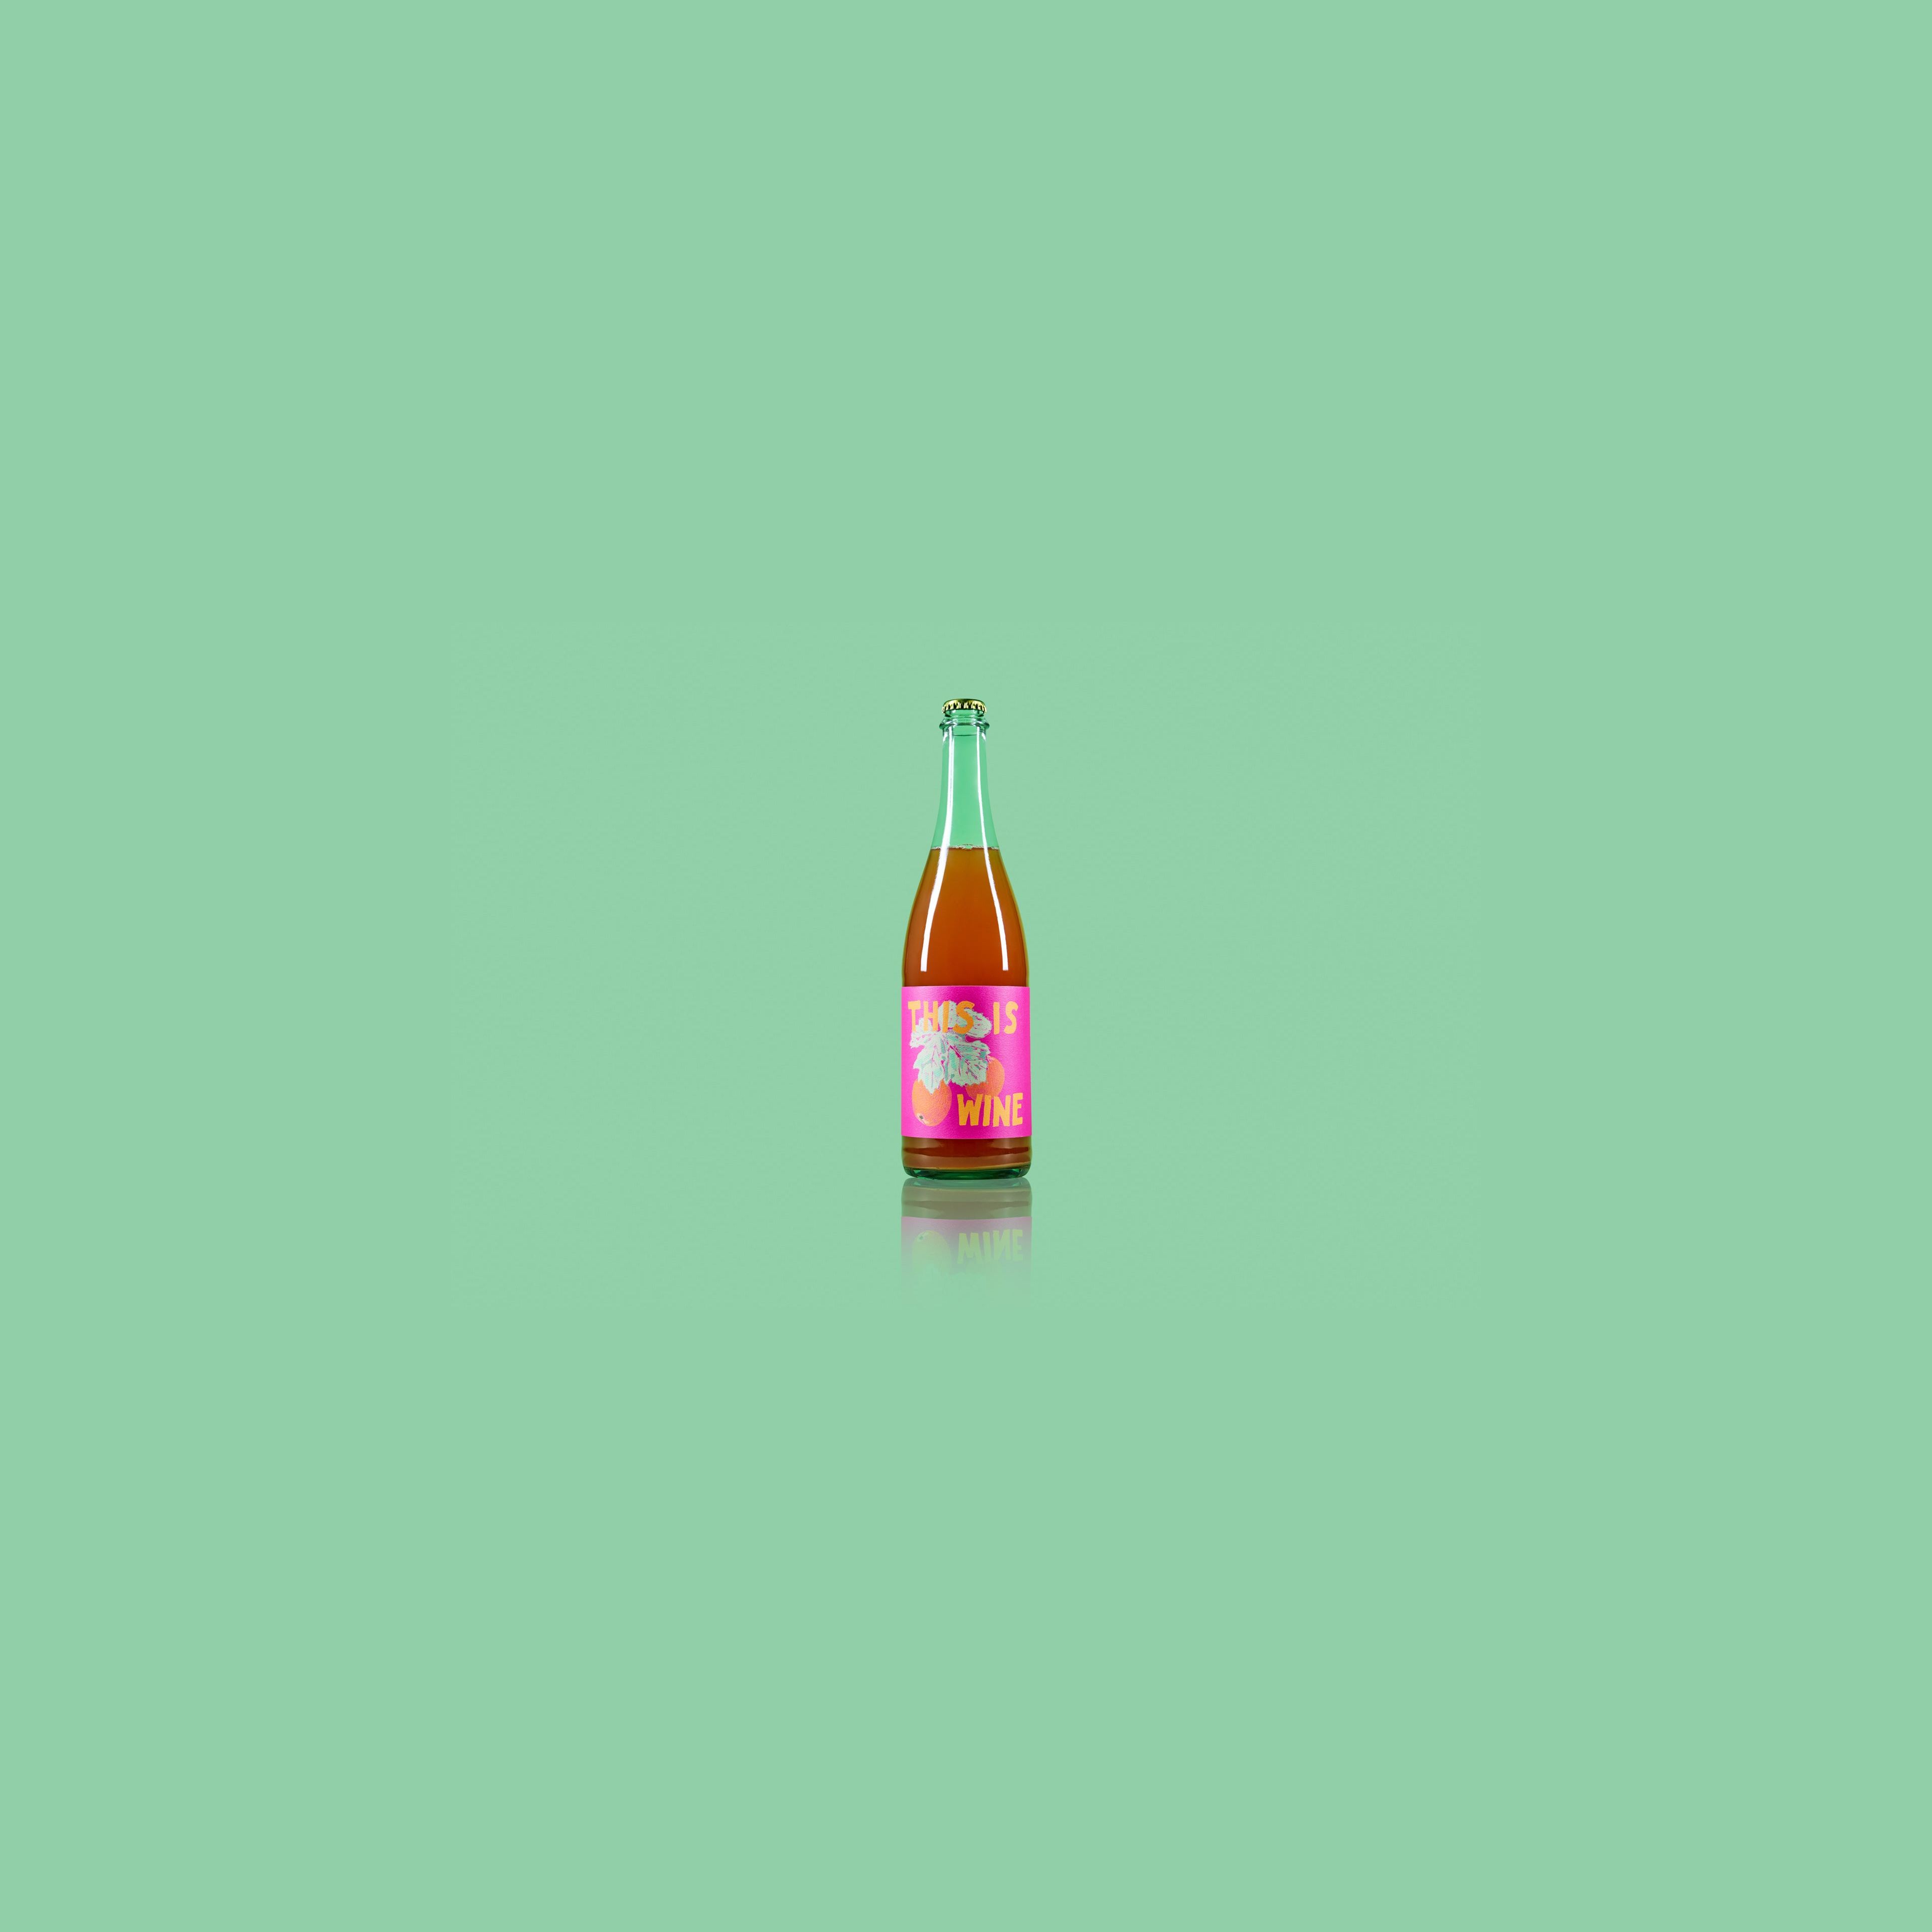 2021 'This Is Wine' Sparkling Apple Cider Pressed on Carignan Skins